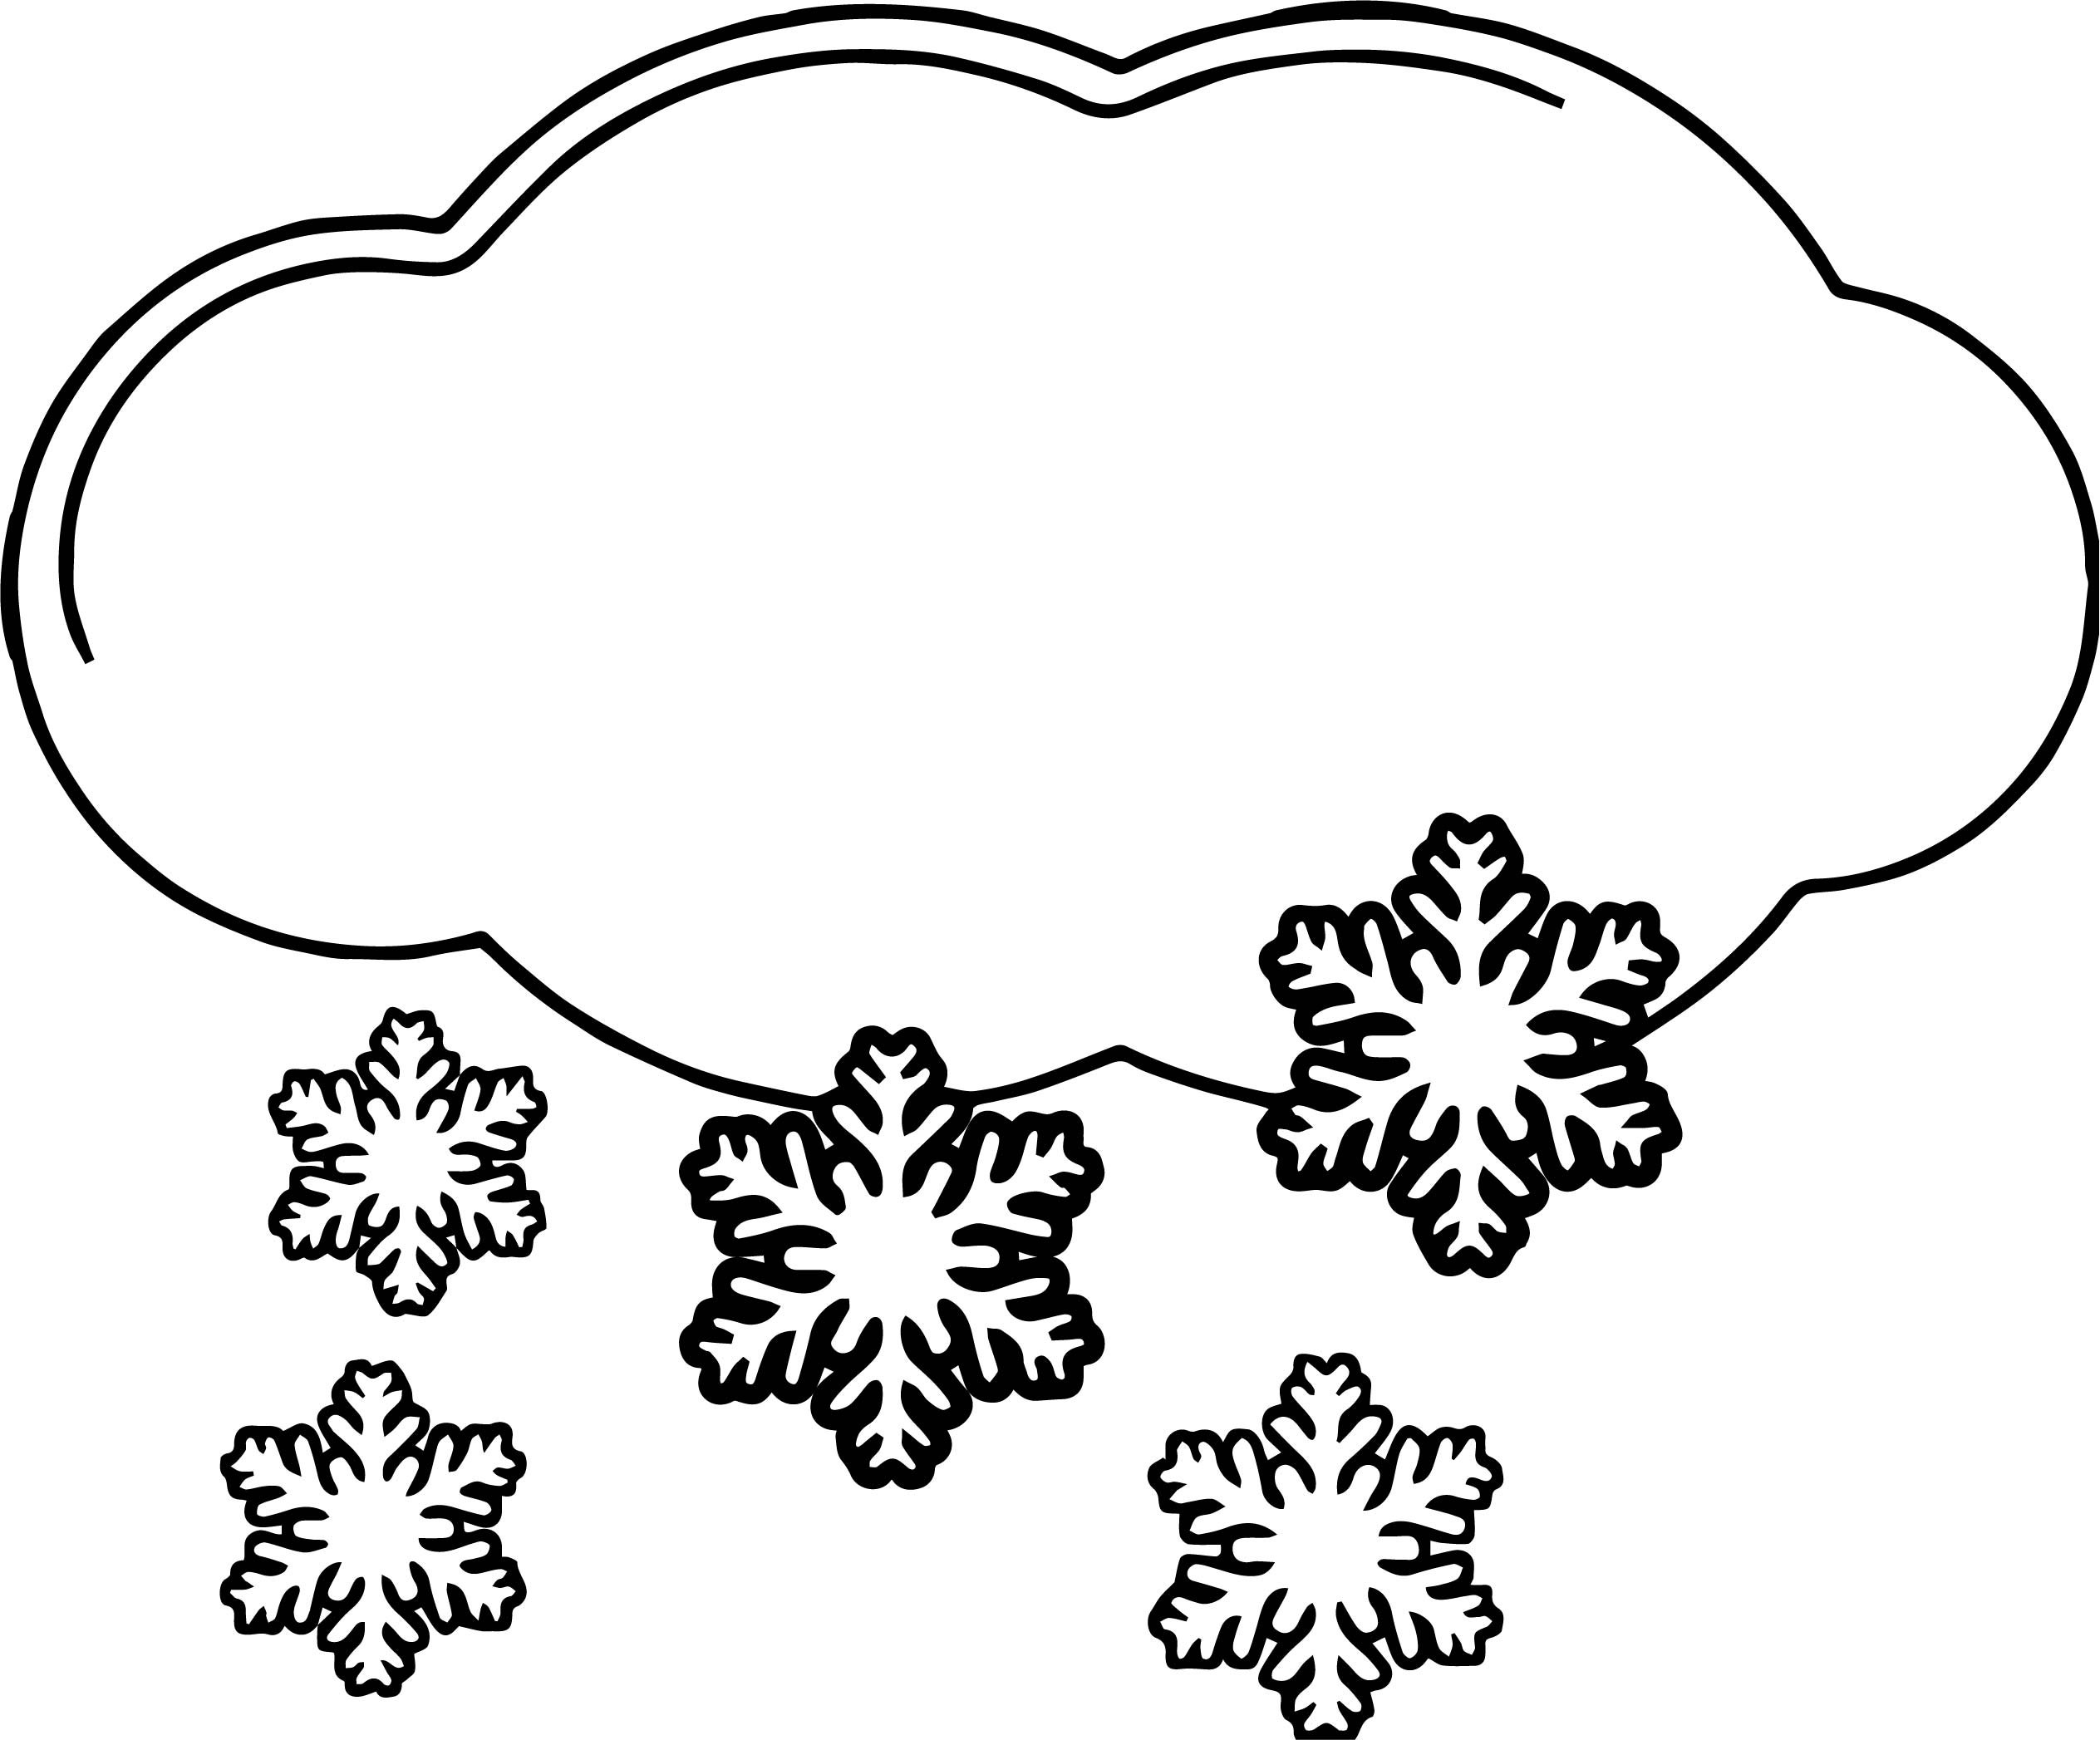 Раскрасим снег. Снег раскраска. Снег раскраска для детей. Снежинка раскраска. Облако со снежинками.